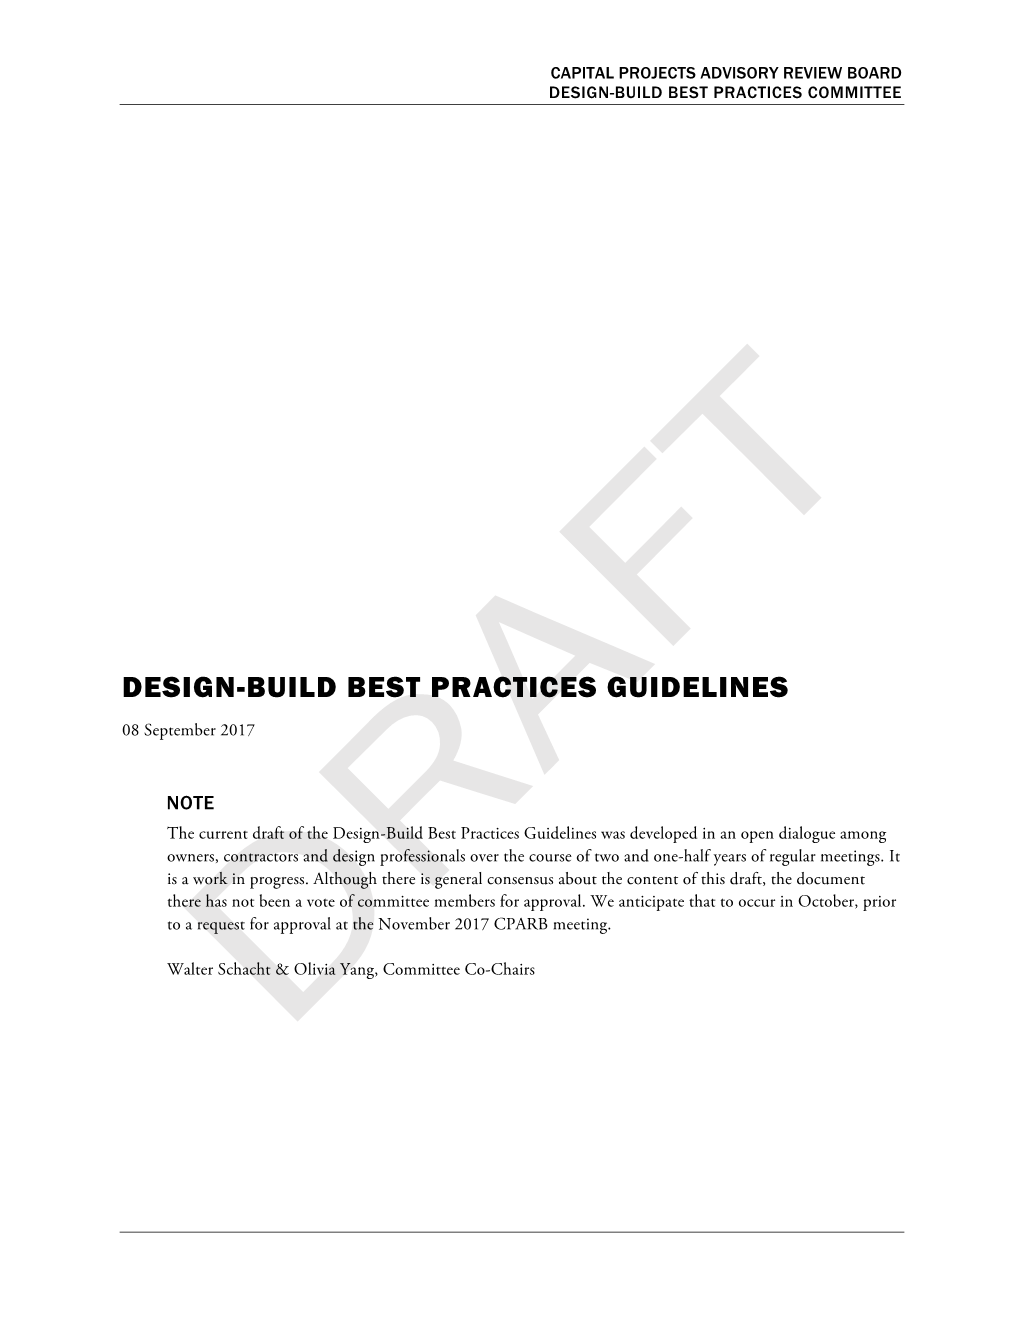 Design-Build Best Practices Guidelines